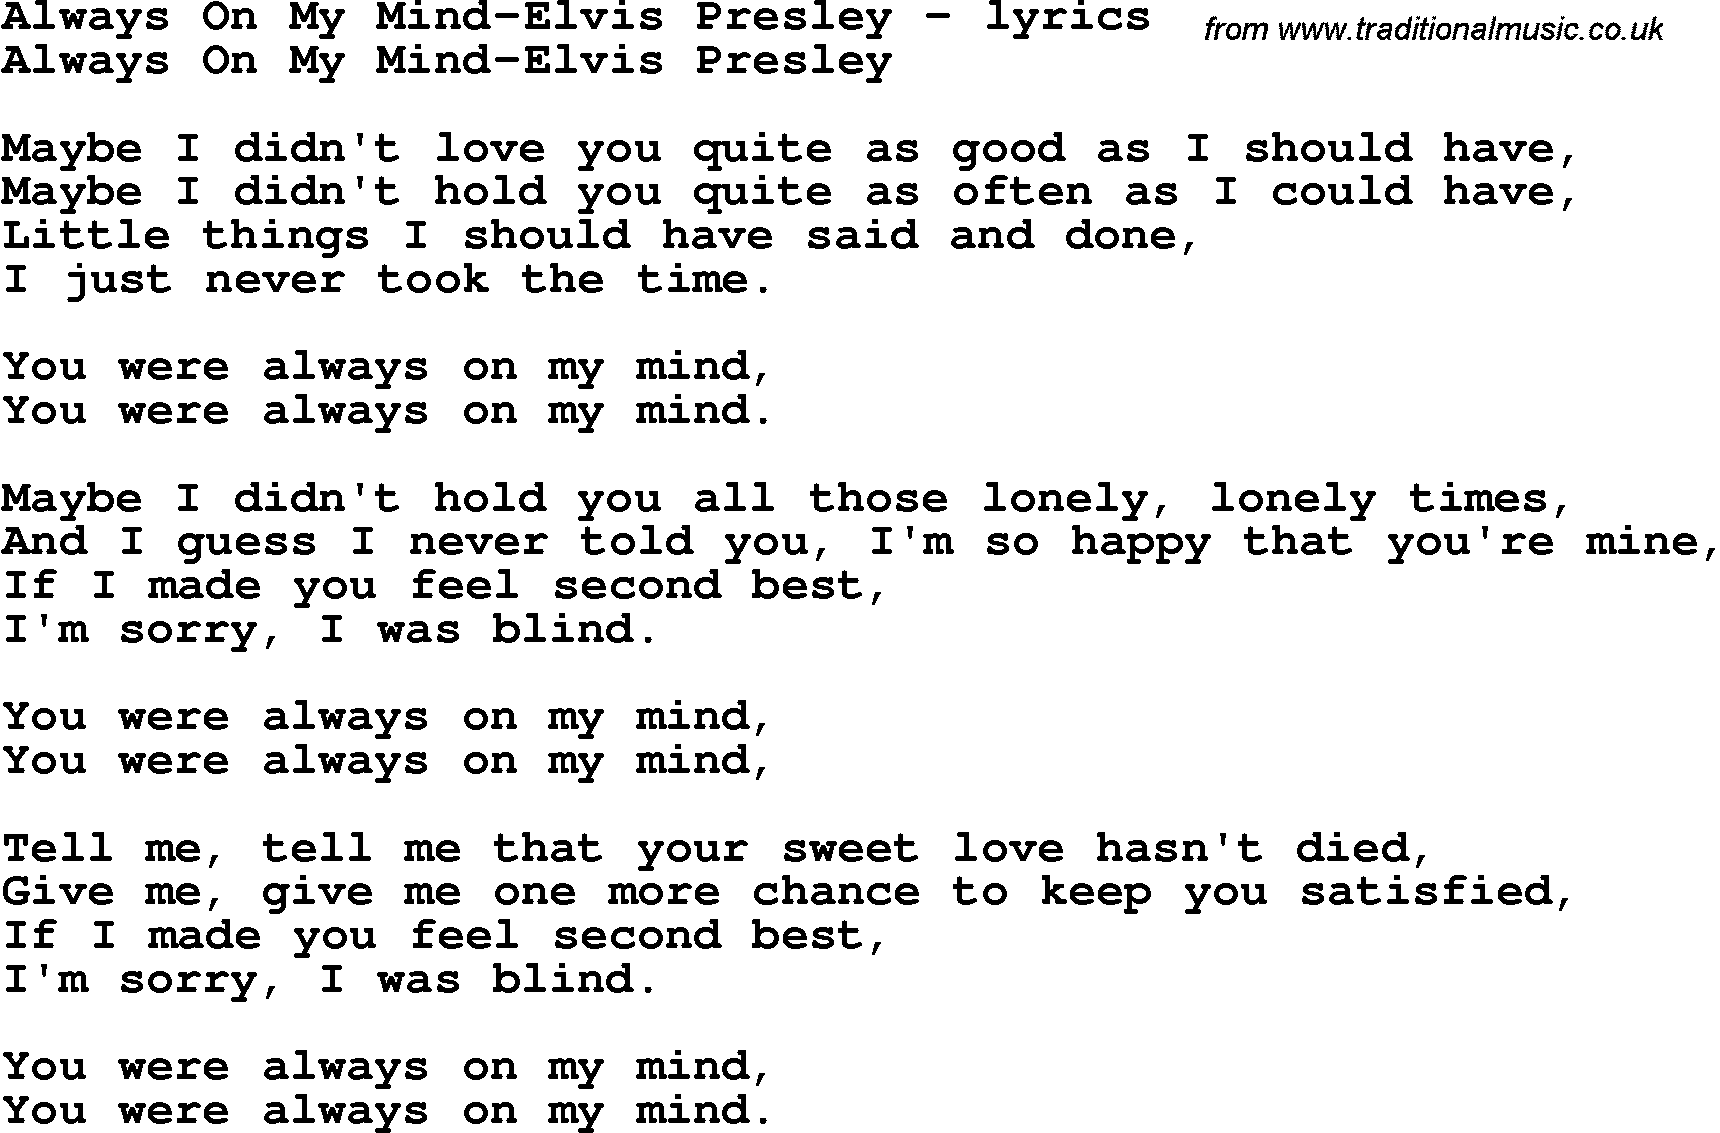 Love Song Lyrics for: Always On My Mind-Elvis Presley